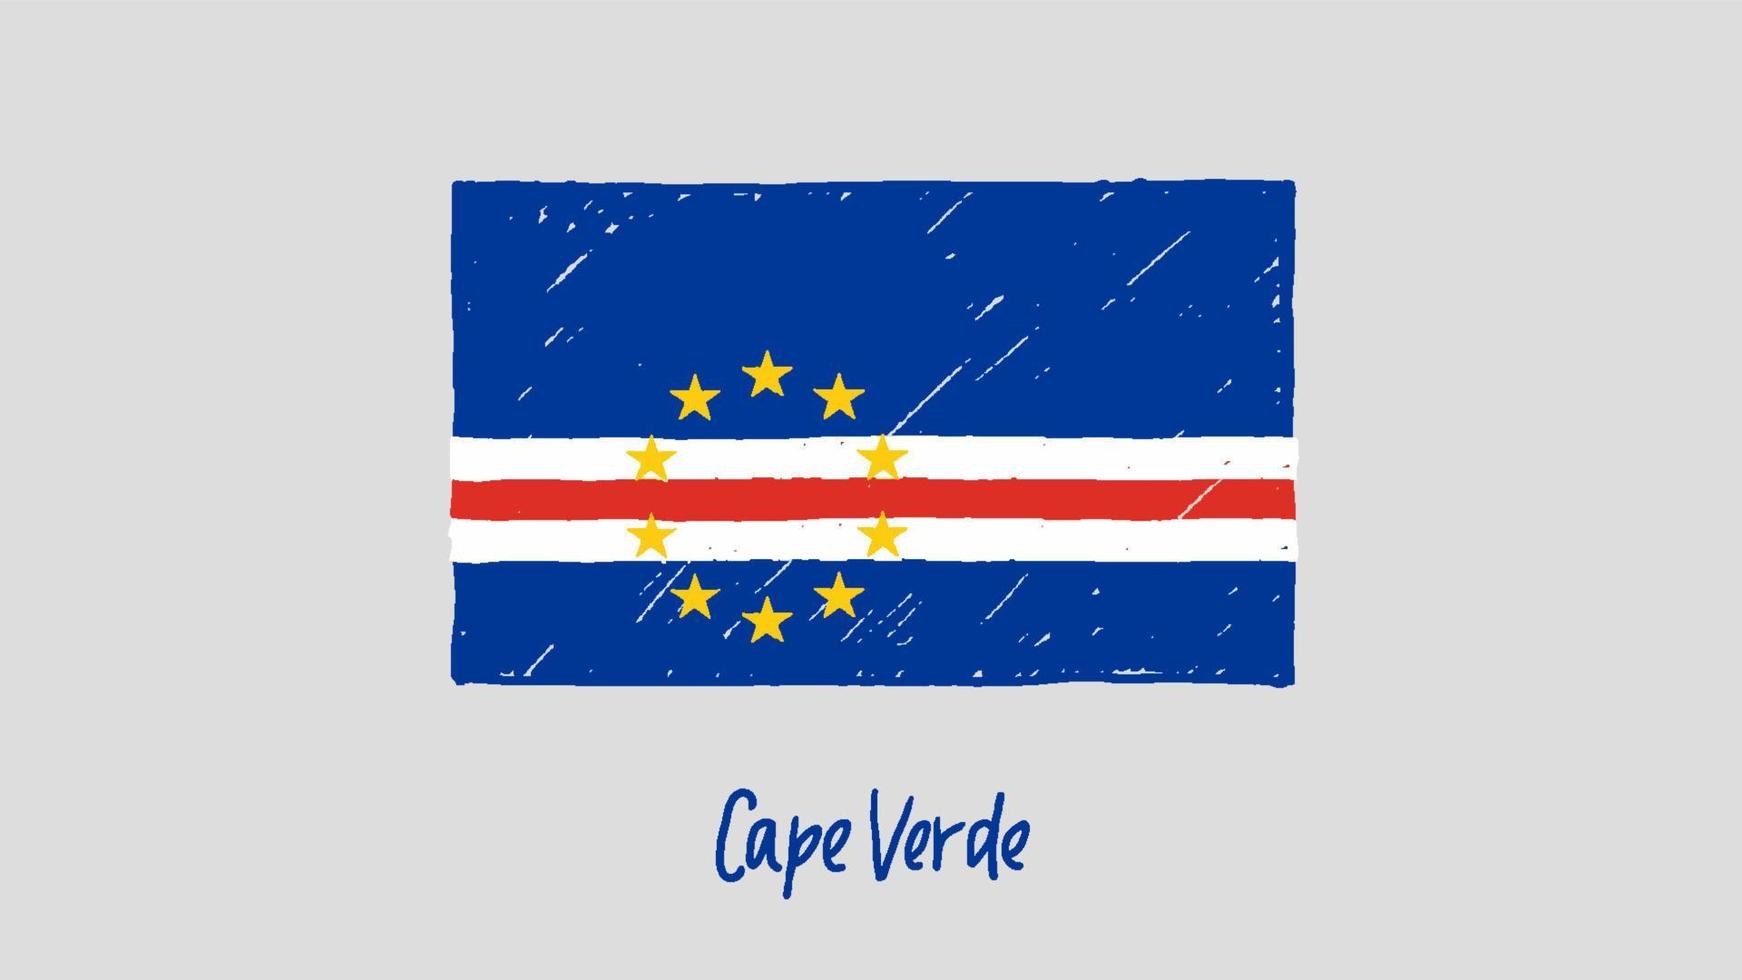 Kaapverdië vlag marker of potlood schets illustratie vector